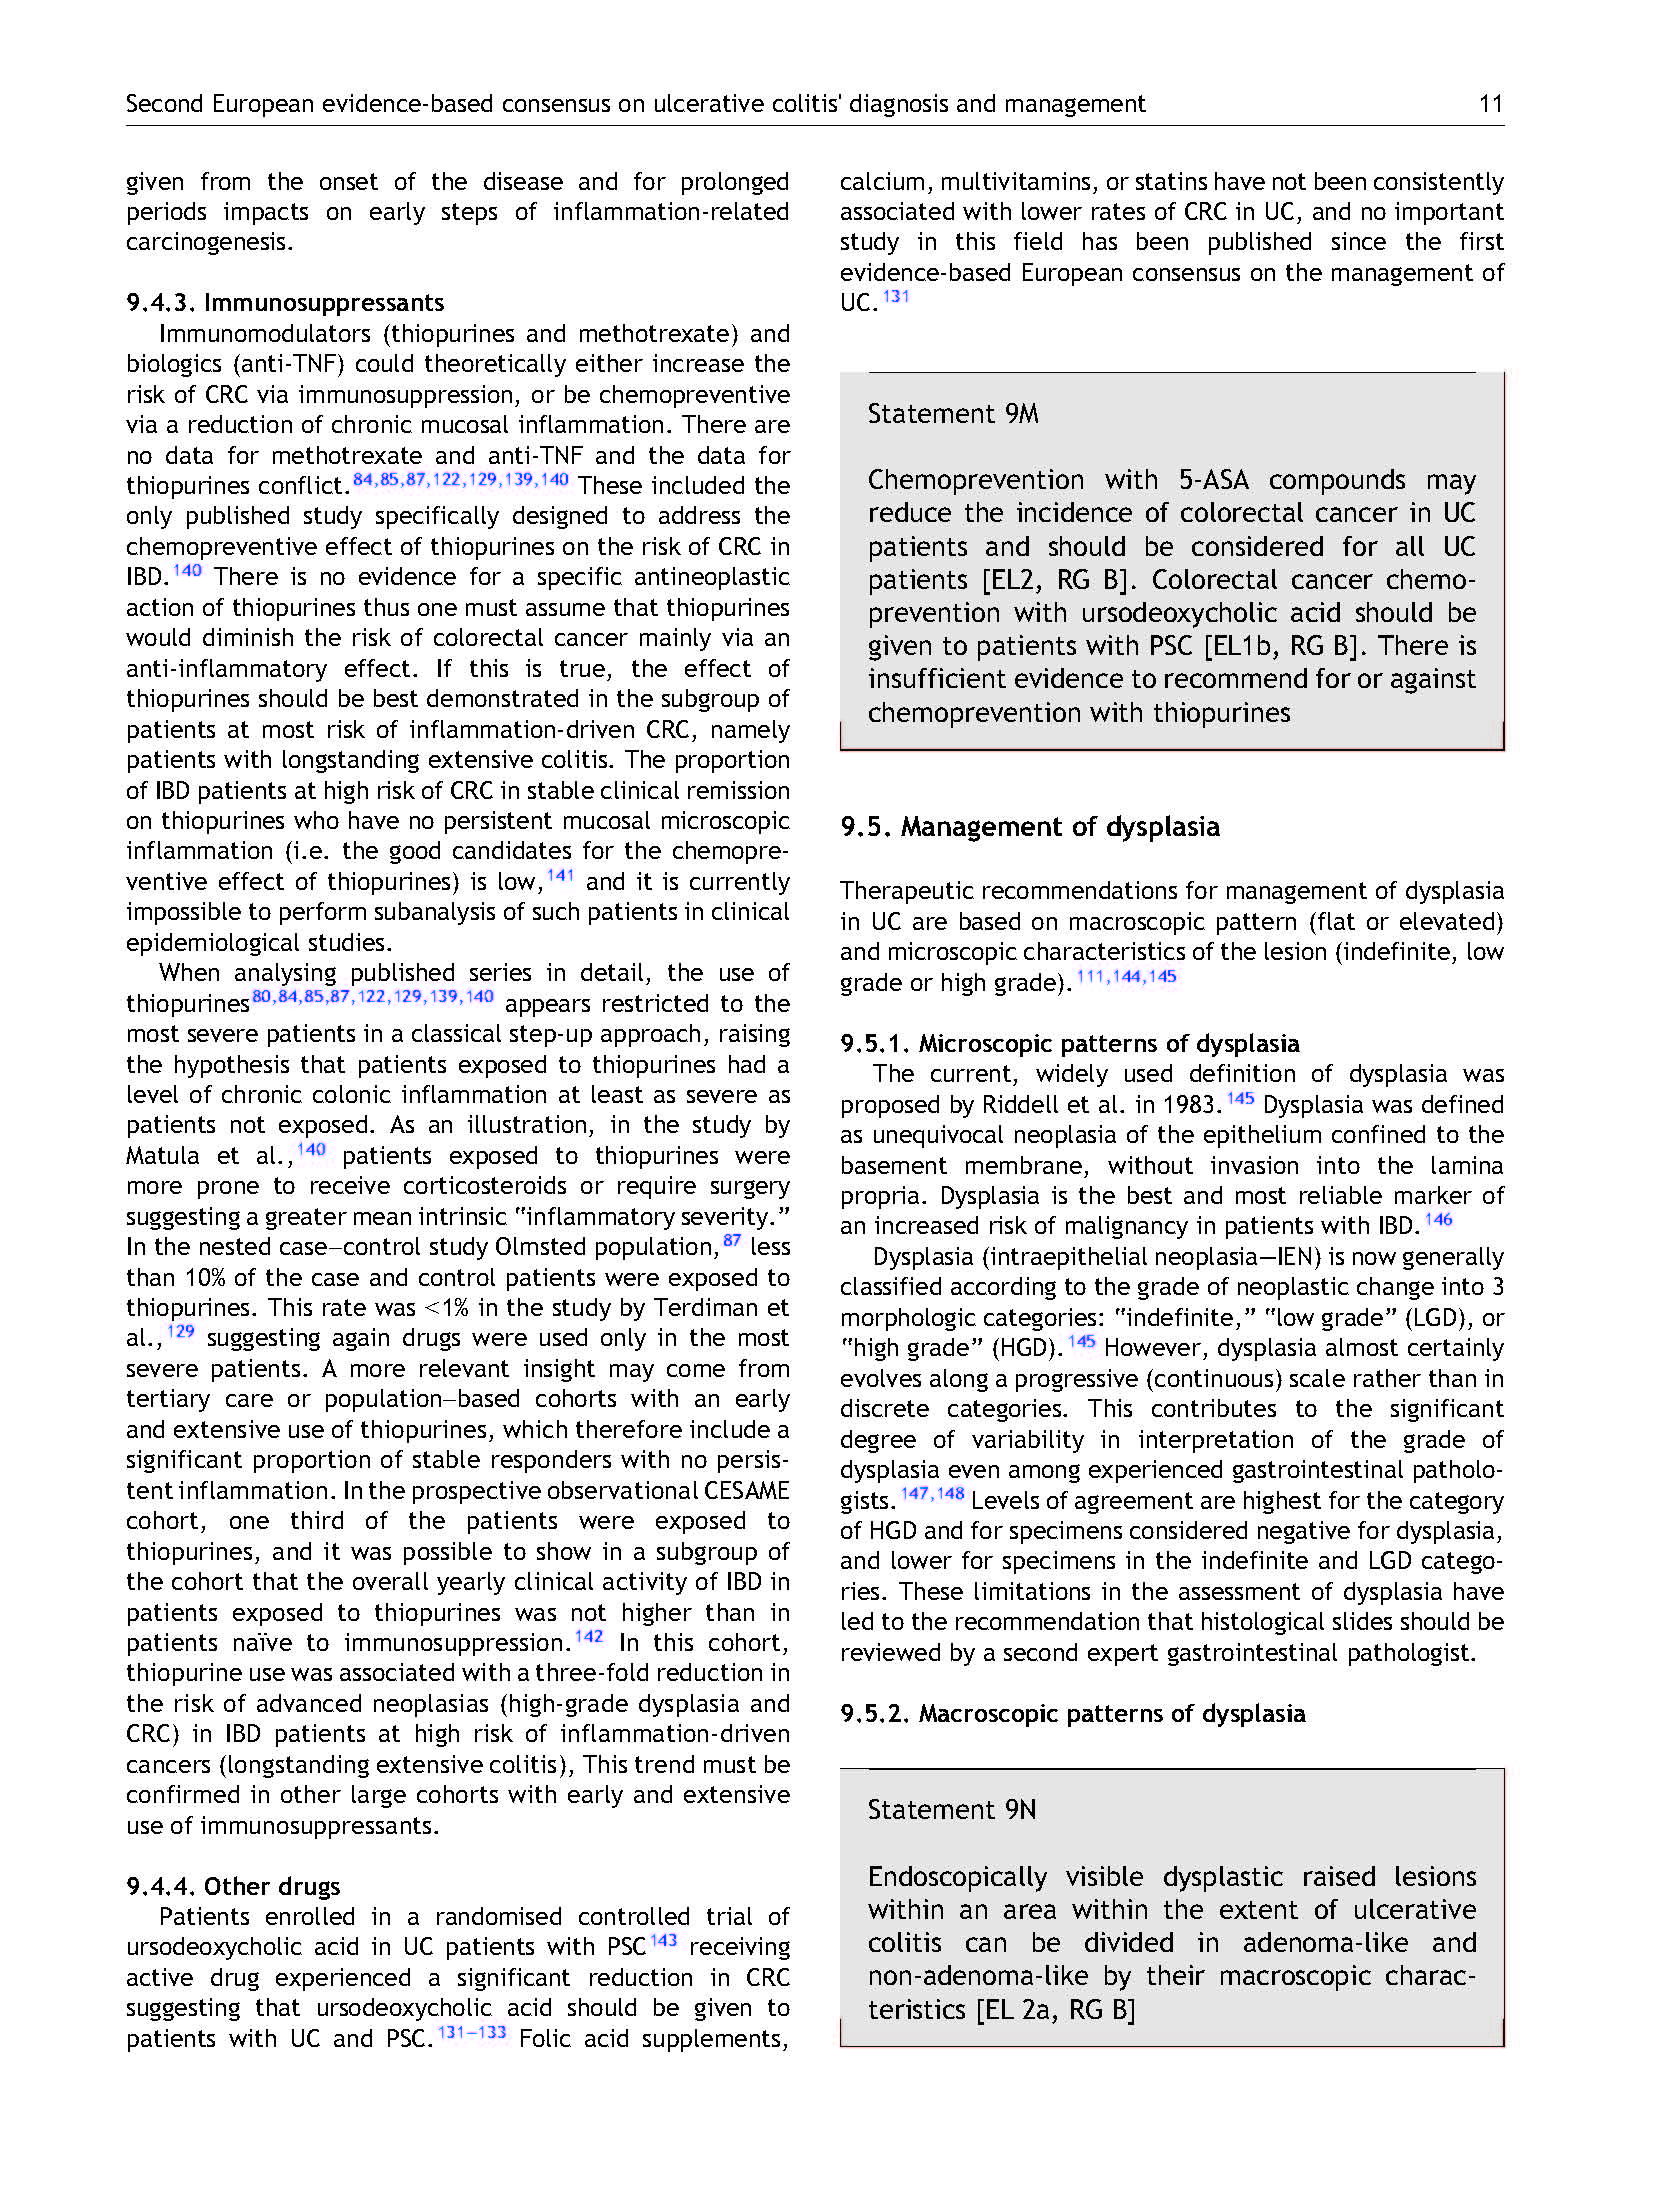 2012-ECCO第二版-欧洲询证共识：溃疡性结肠炎的诊断和处理—特殊情况_页面_11.jpg